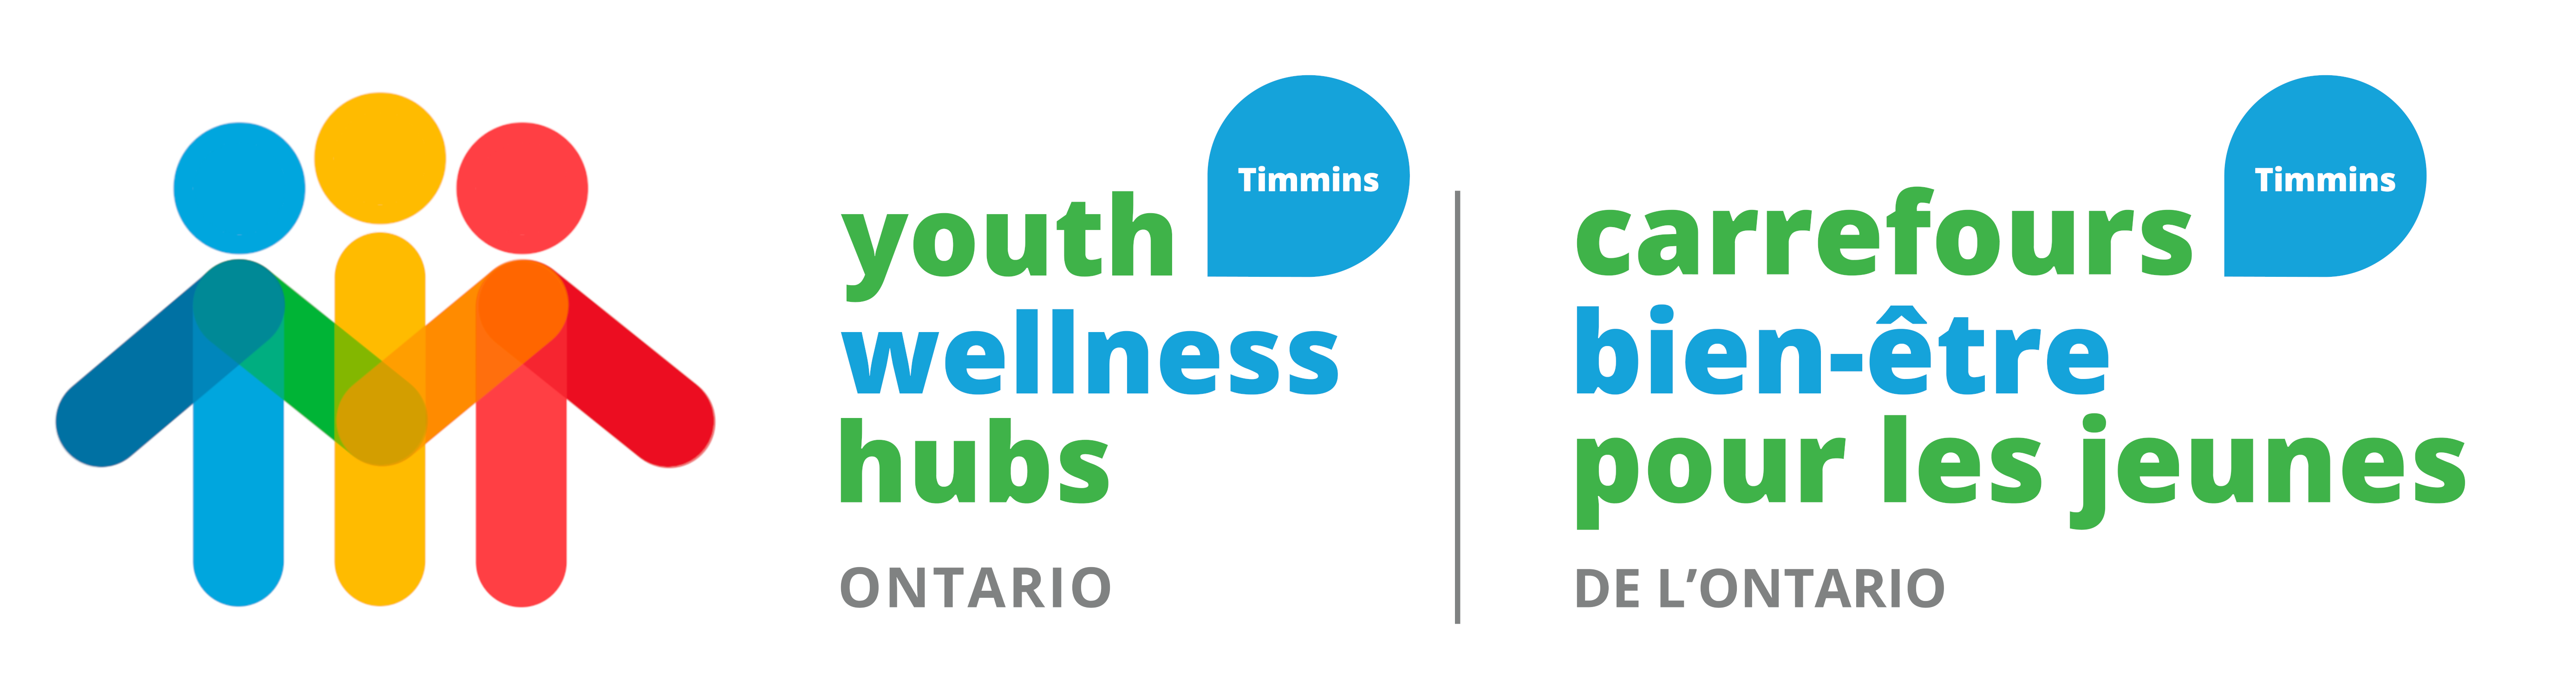 Timmins Youth Wellness Hub